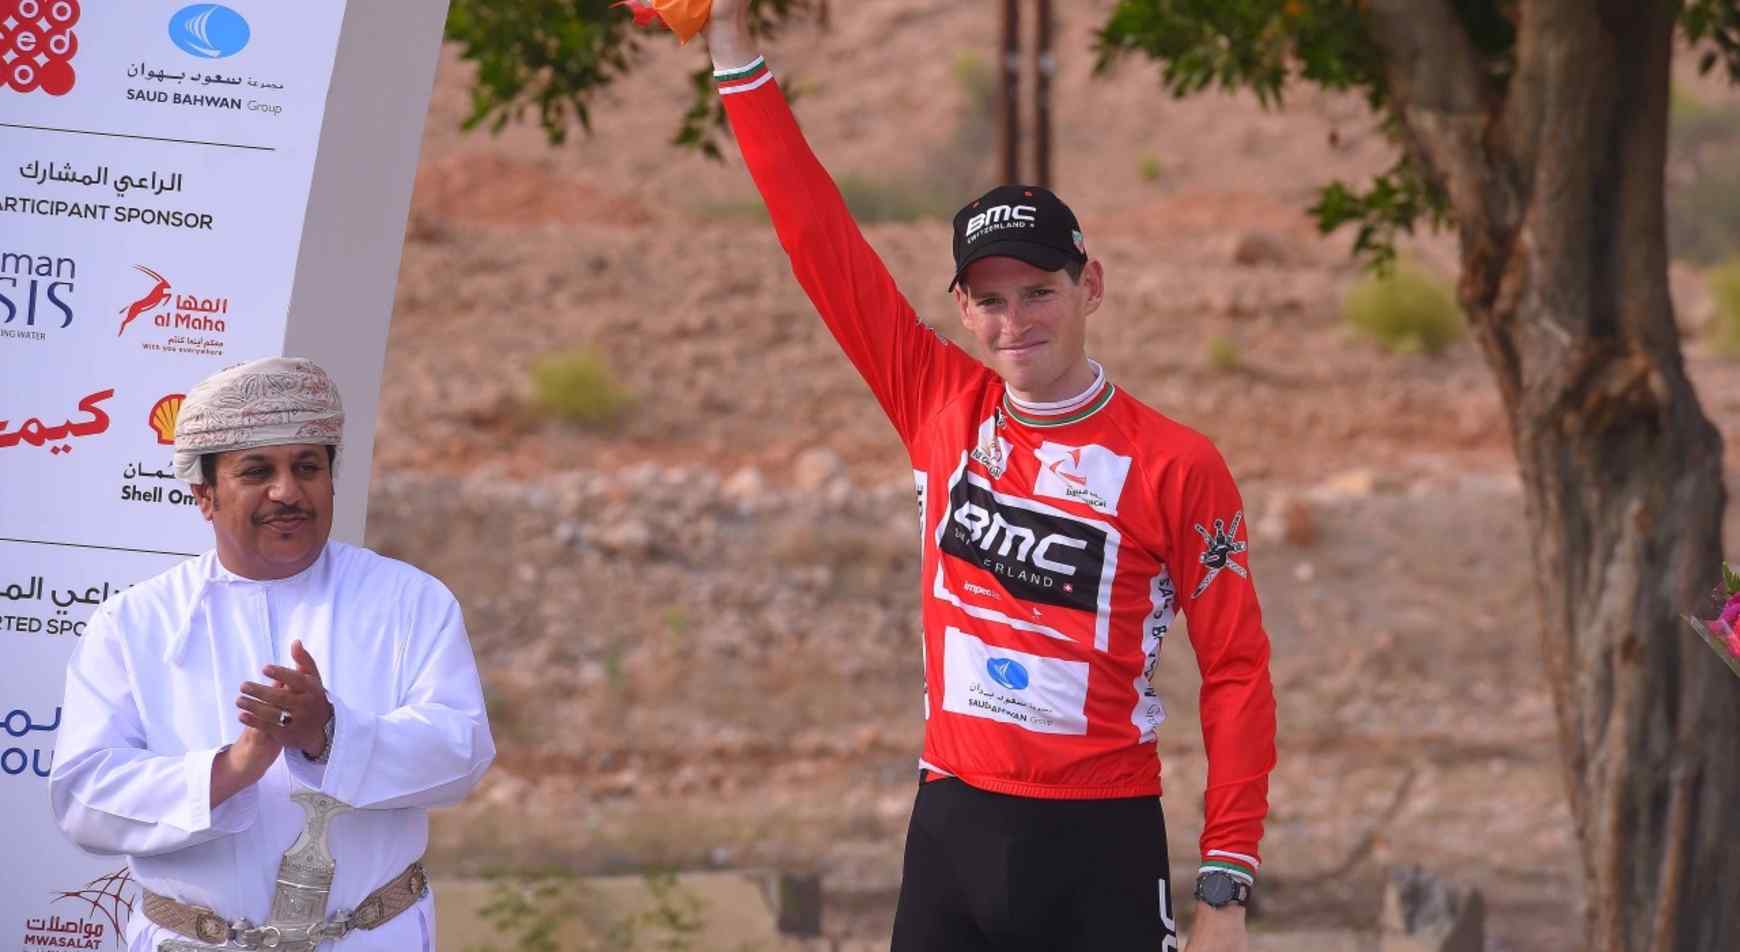 Cycling: 8th Tour of Oman 2017 / Stage 3 Podium / Ben HERMANS (BEL) Red Leader Jersey/ Celebration /  Sultan Qaboos University - Quriyat 250m (162km) / © Tim De Waele